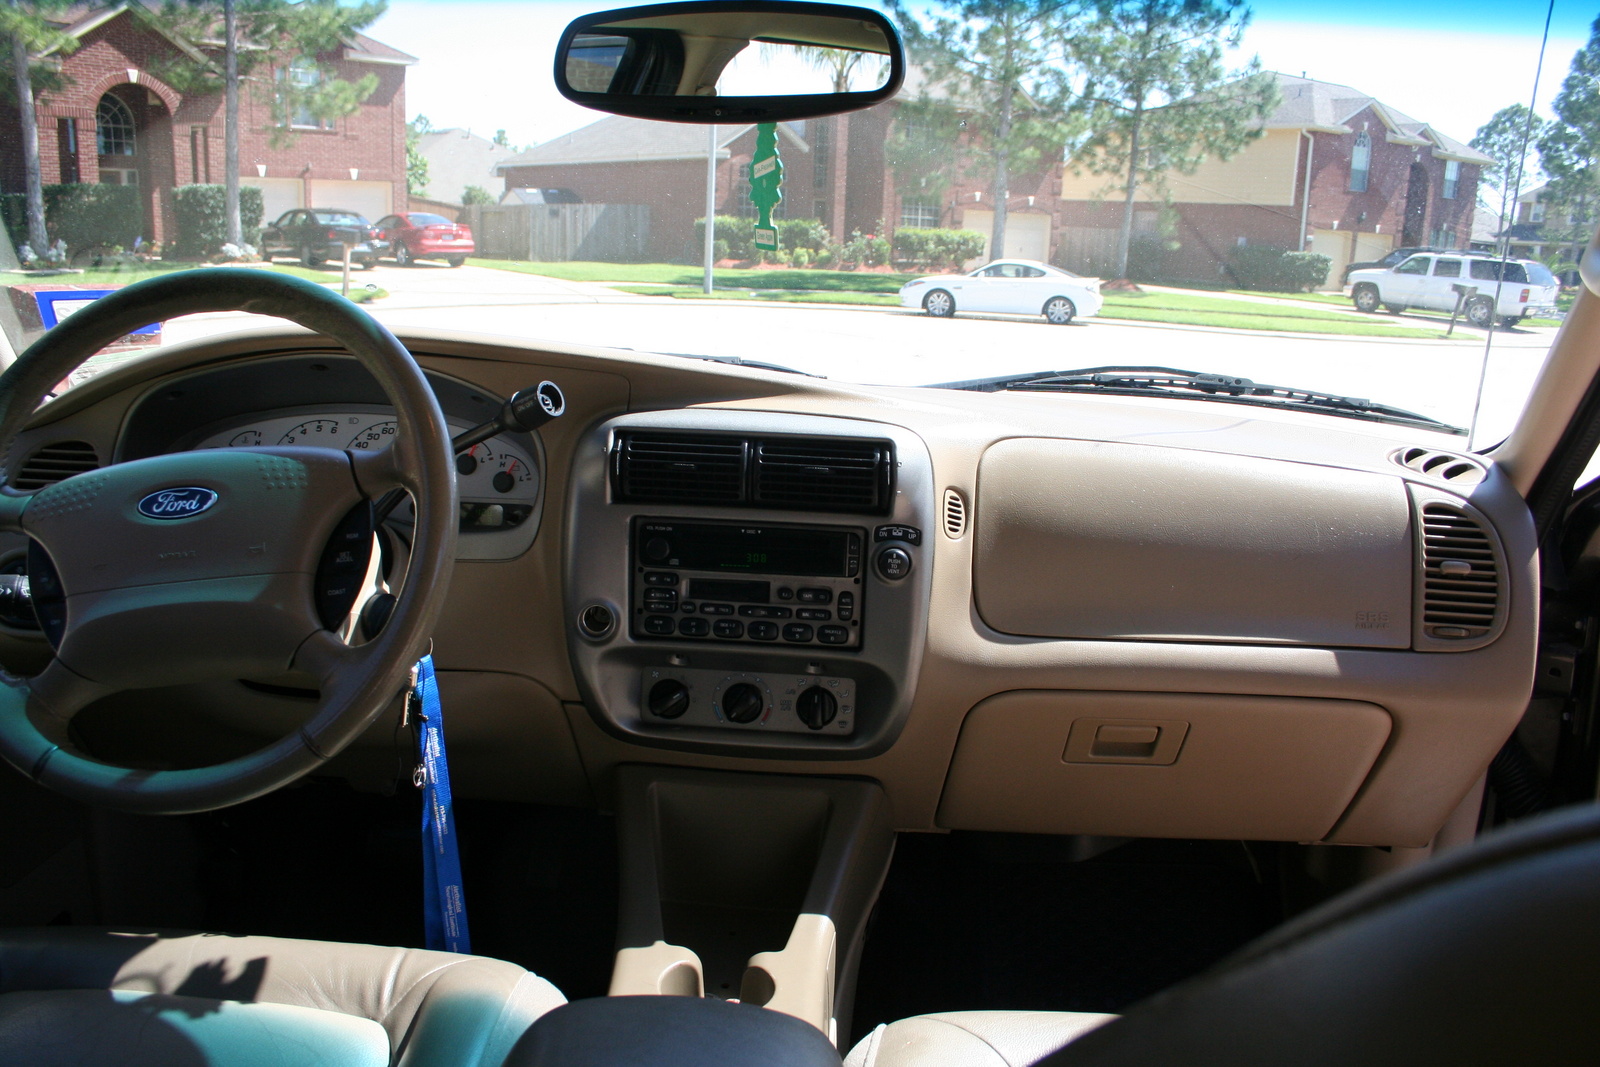 2005 Ford explorer sport trac interior #2